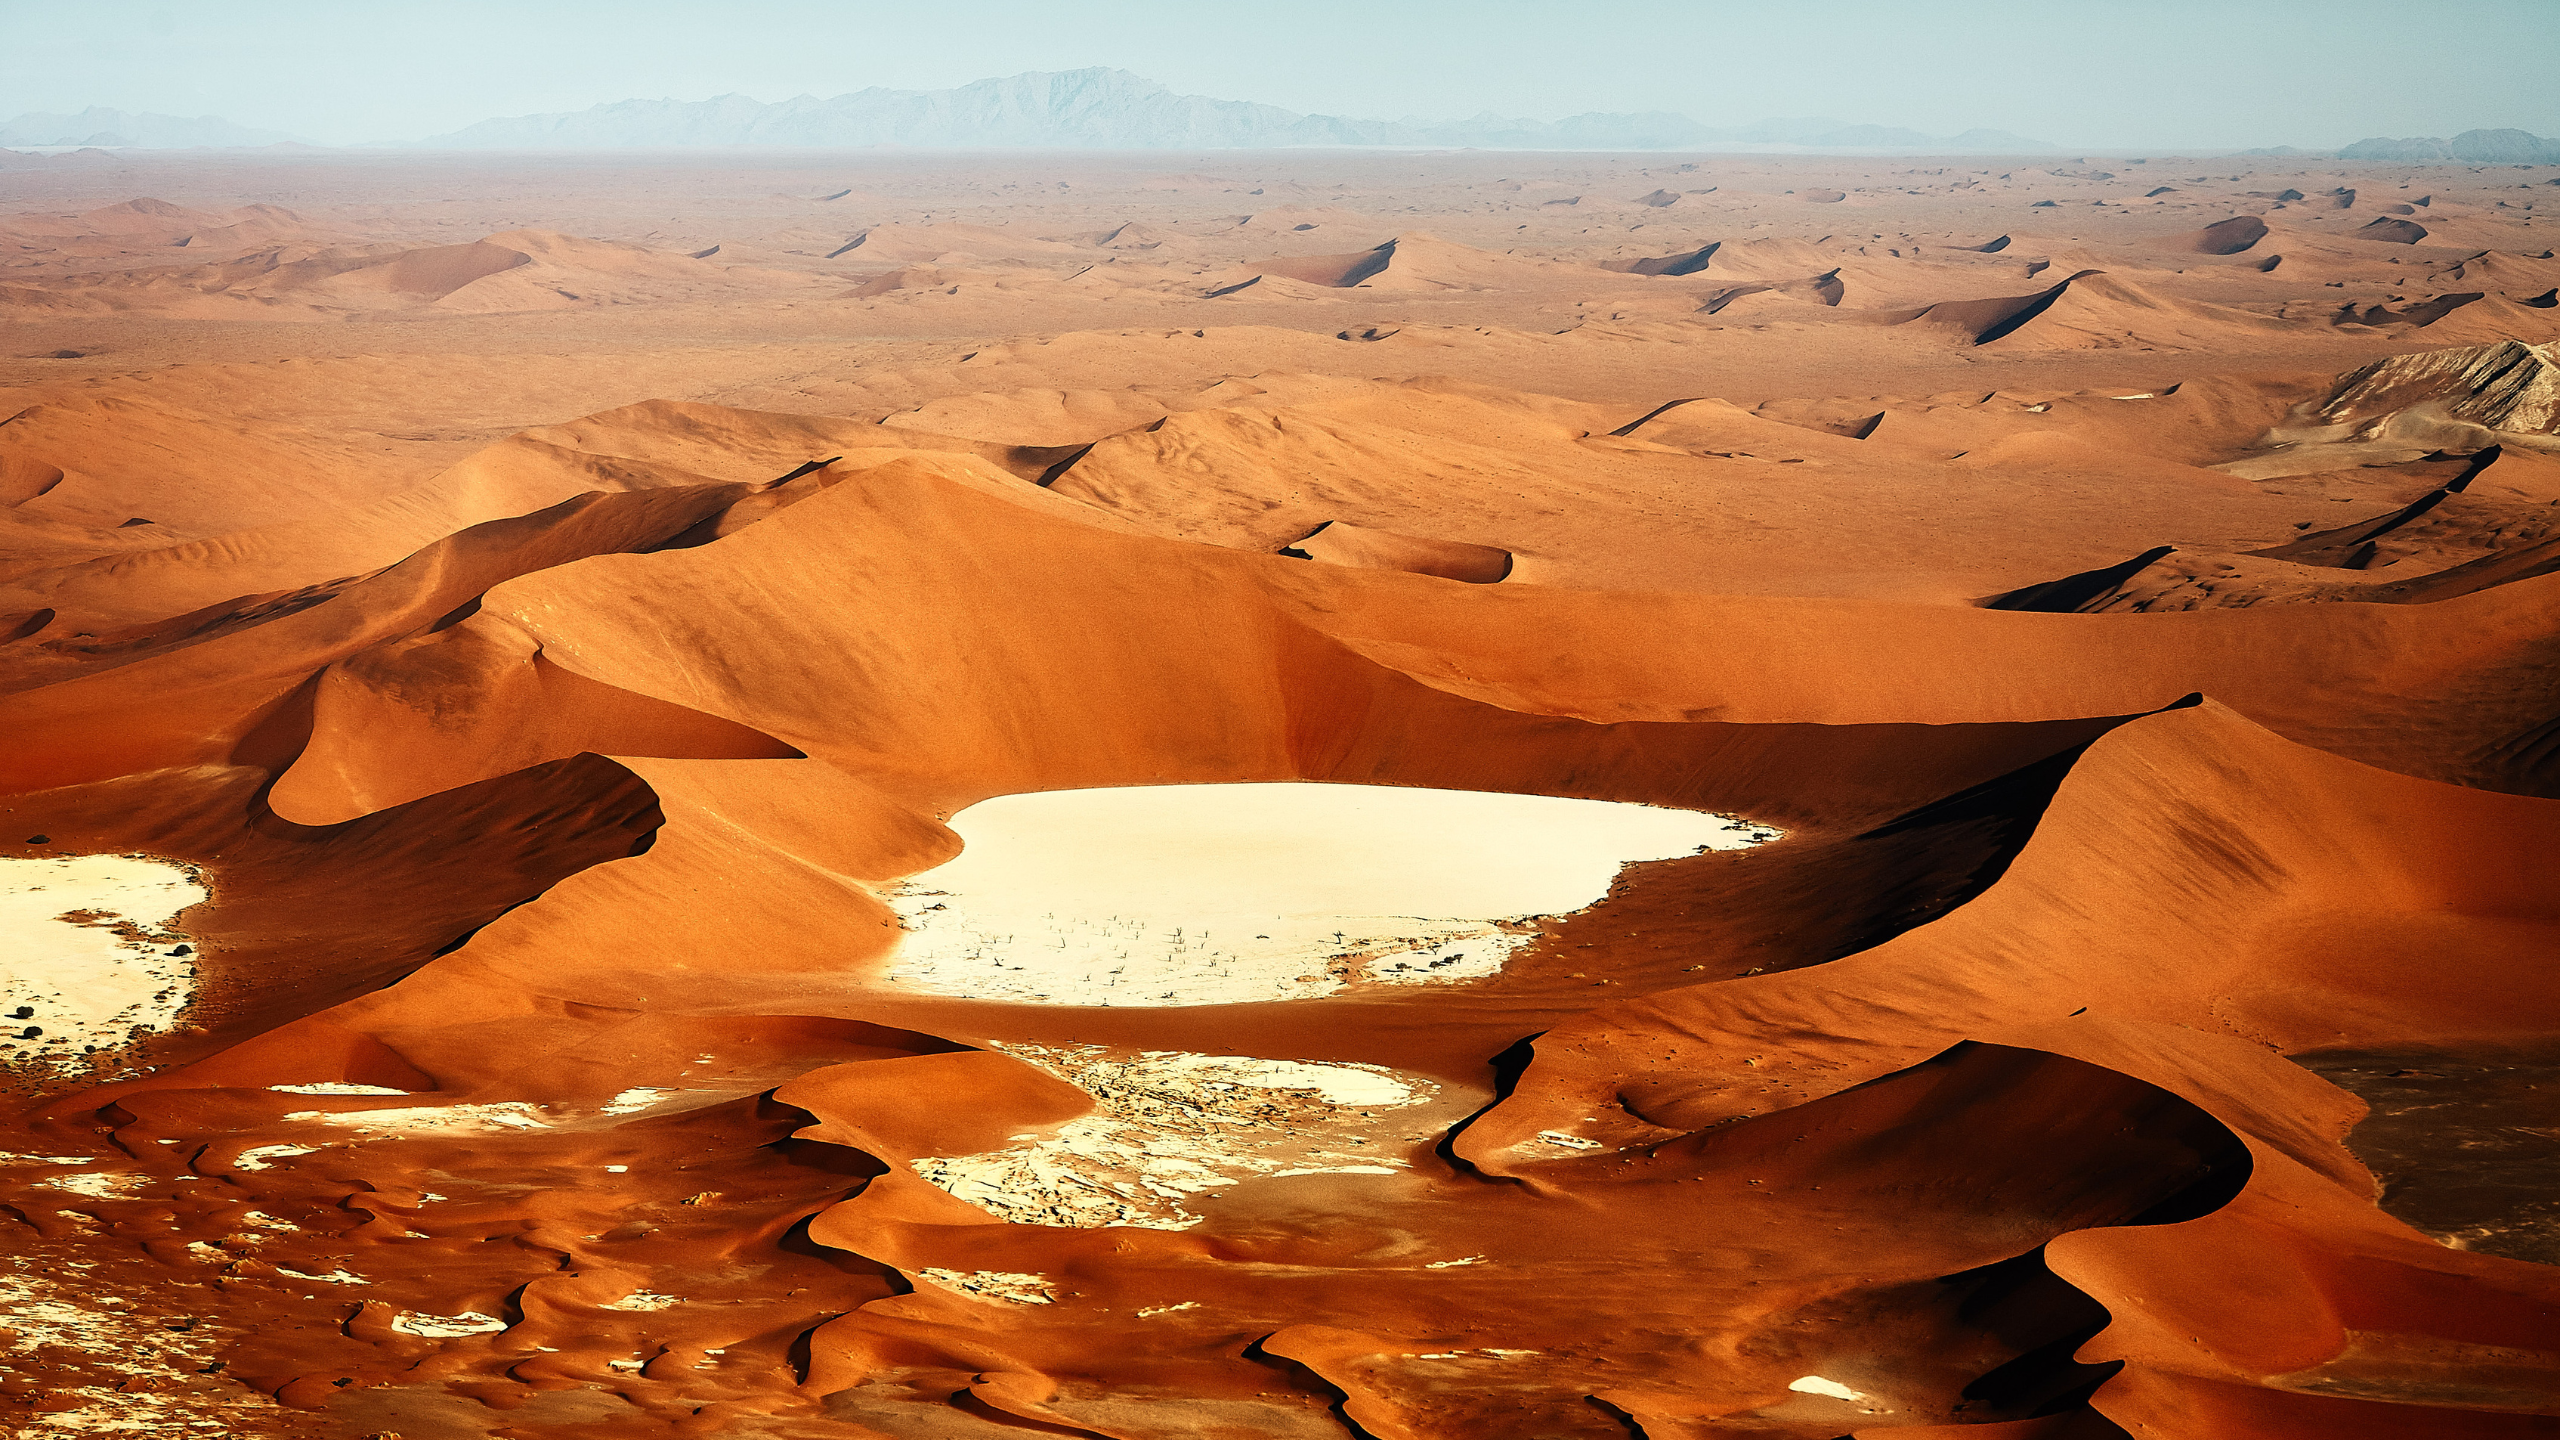 Namib Desert in Namibia, Africa is the oldest desert in the world